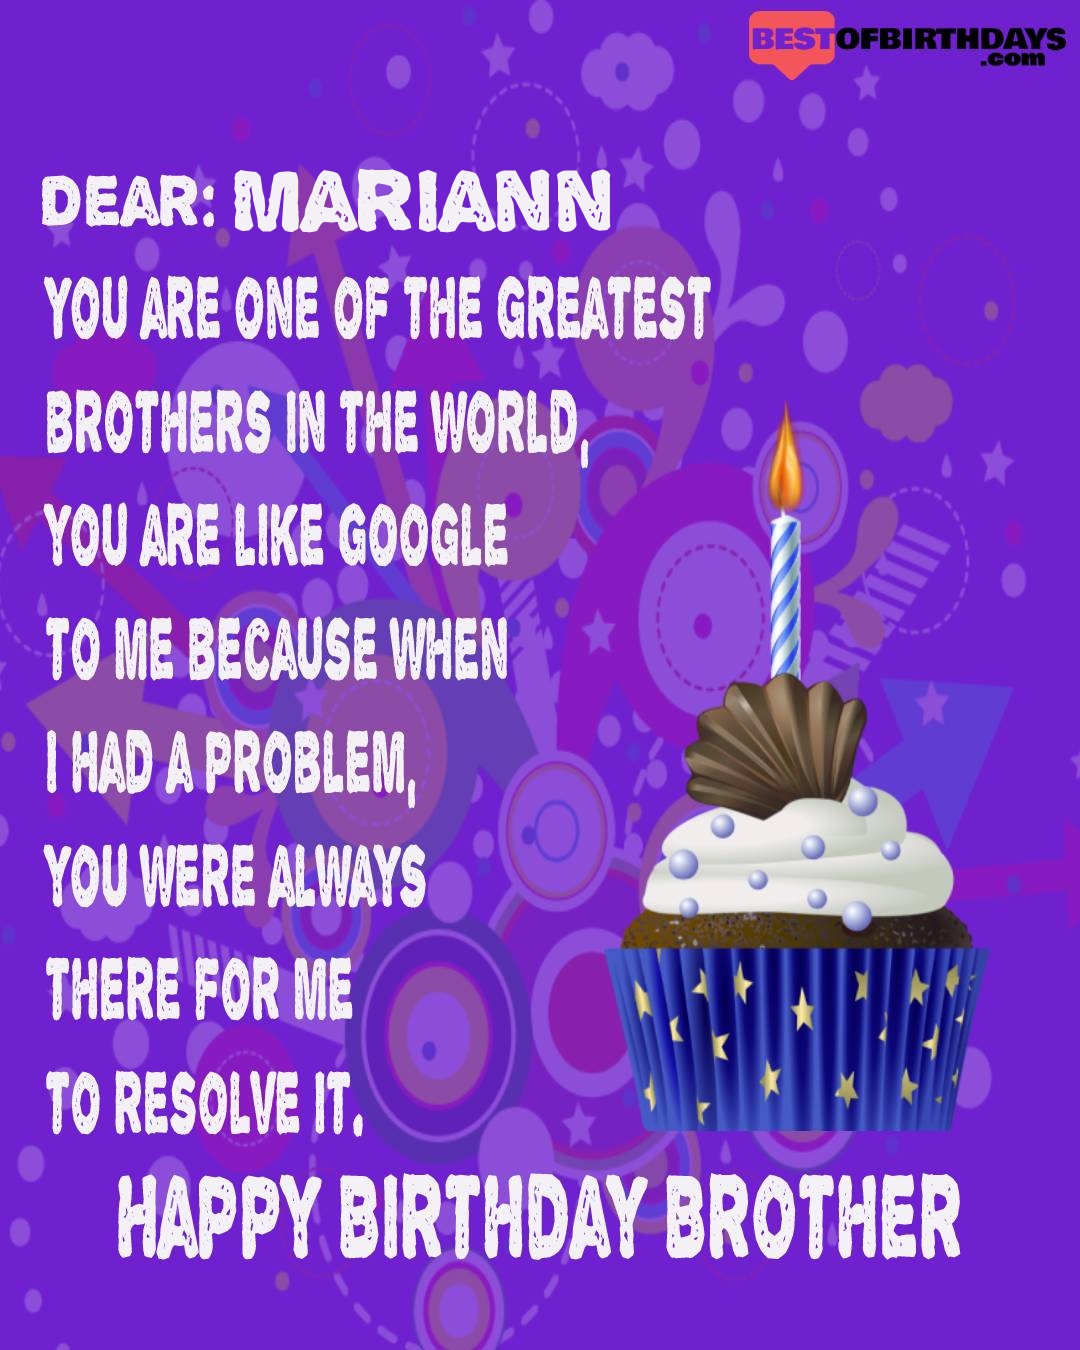 Happy birthday mariann bhai brother bro